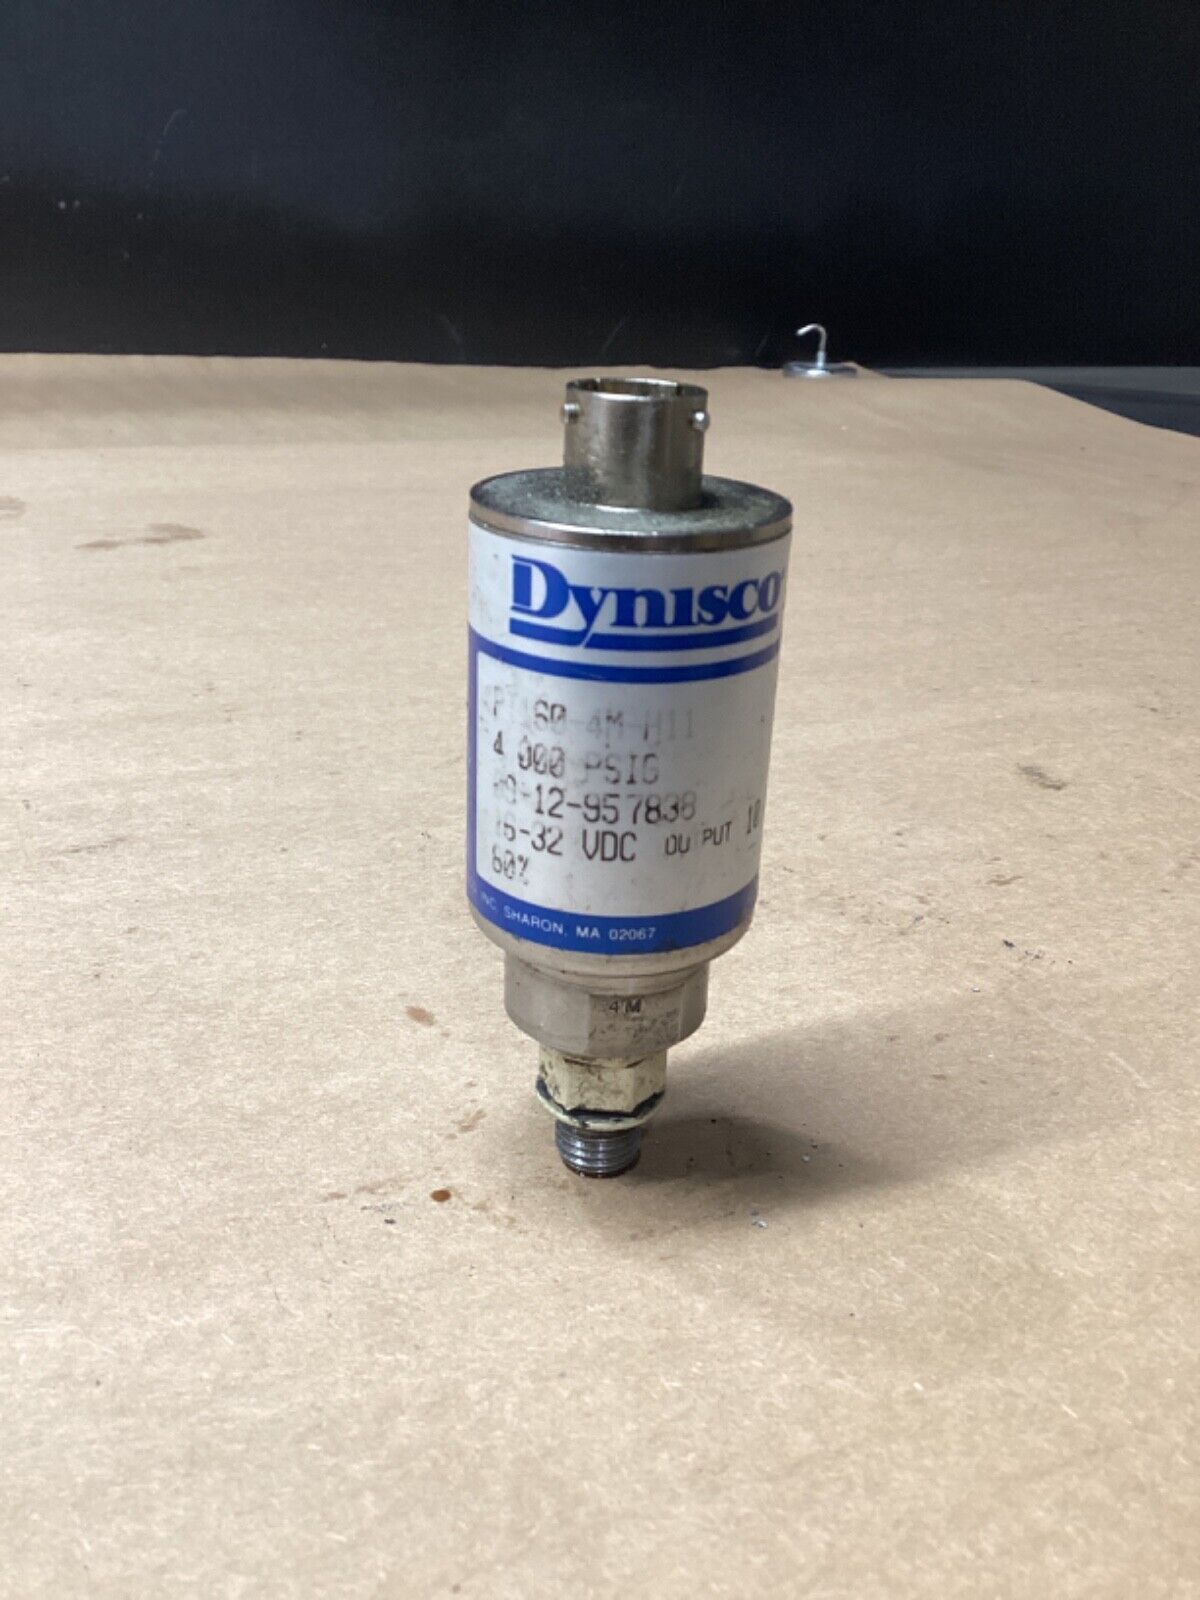 DYNISCO Pressure Transducer PT160-4M-H11 #104M12